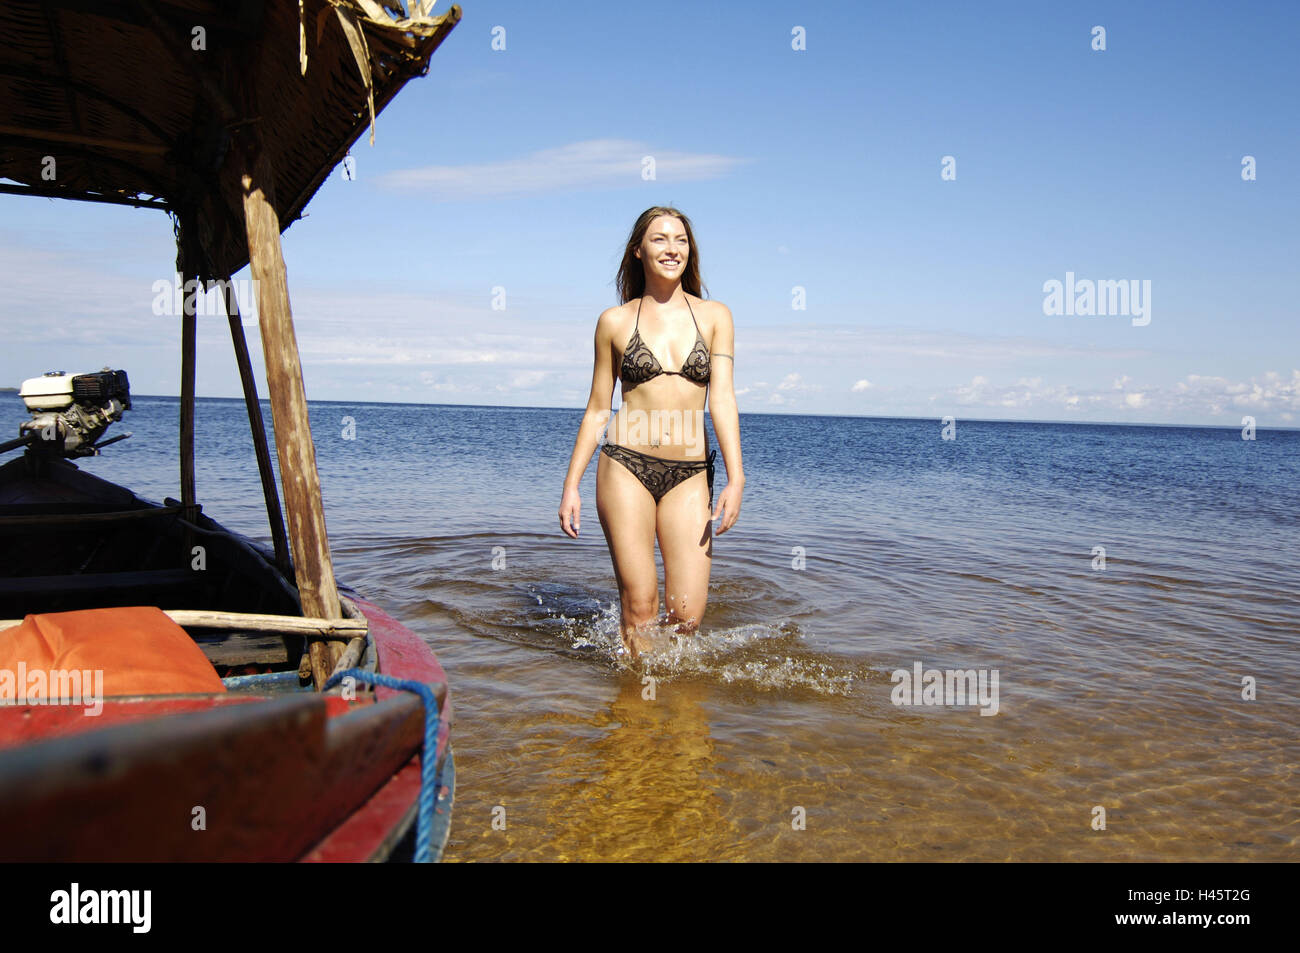 Young woman fishing bikini hi-res stock photography and images - Alamy